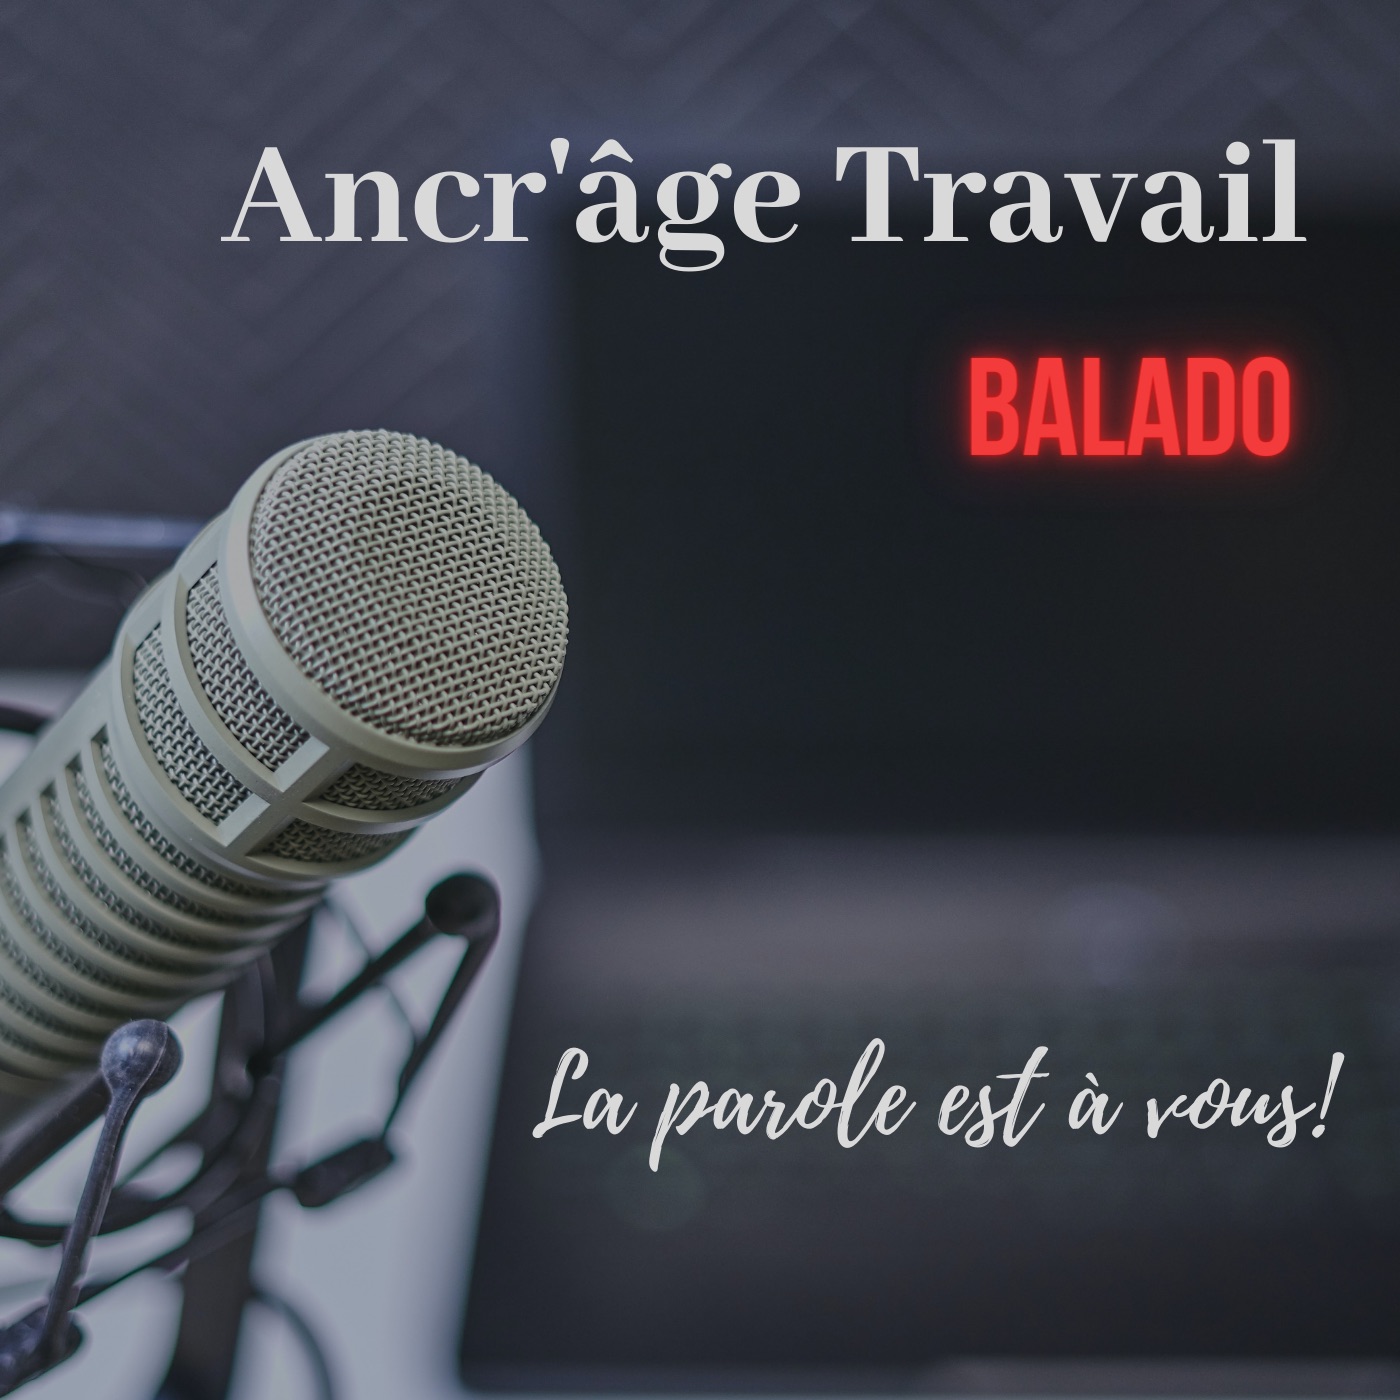 Balado  -  Ancr’âge Travail  -  Podcast